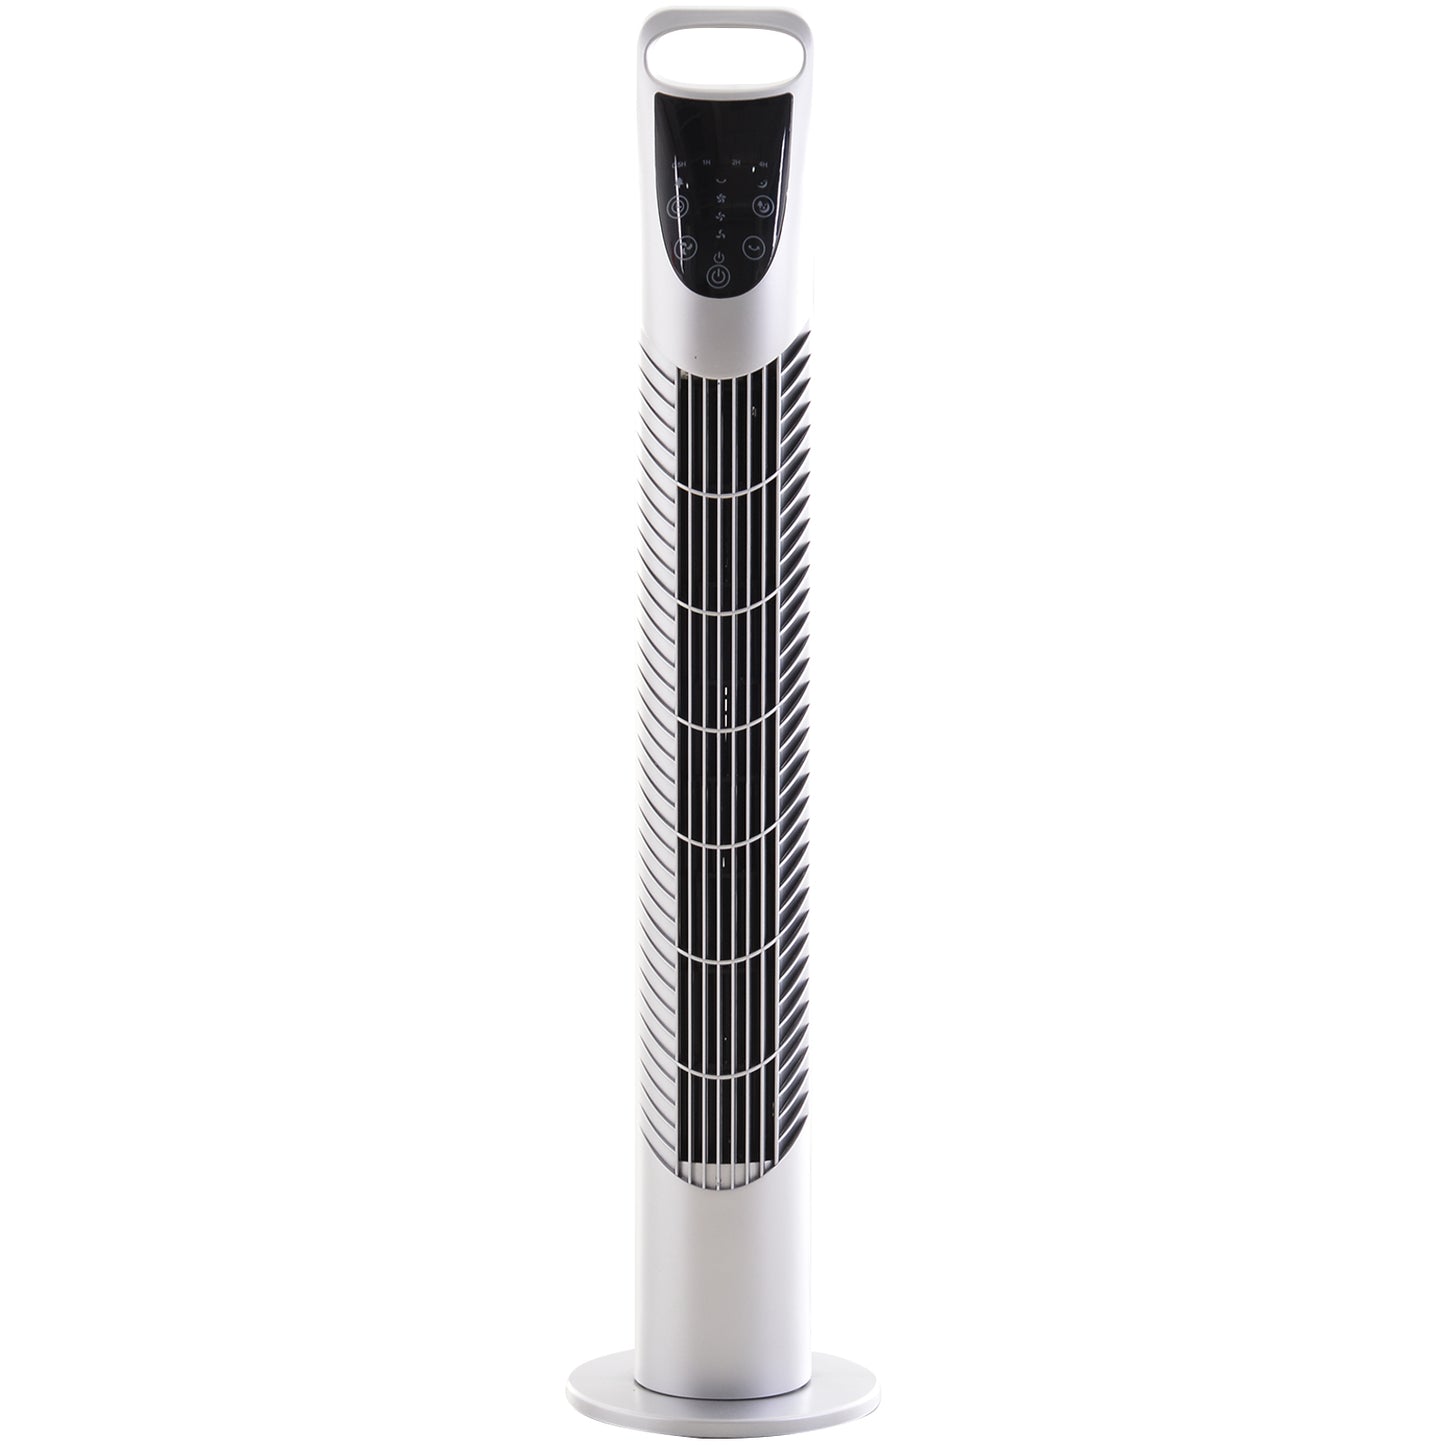 HOMCOM 40W Wind Speed Adjustable ABS Quiet Oscillating Tower Fan w/ Remote Silver